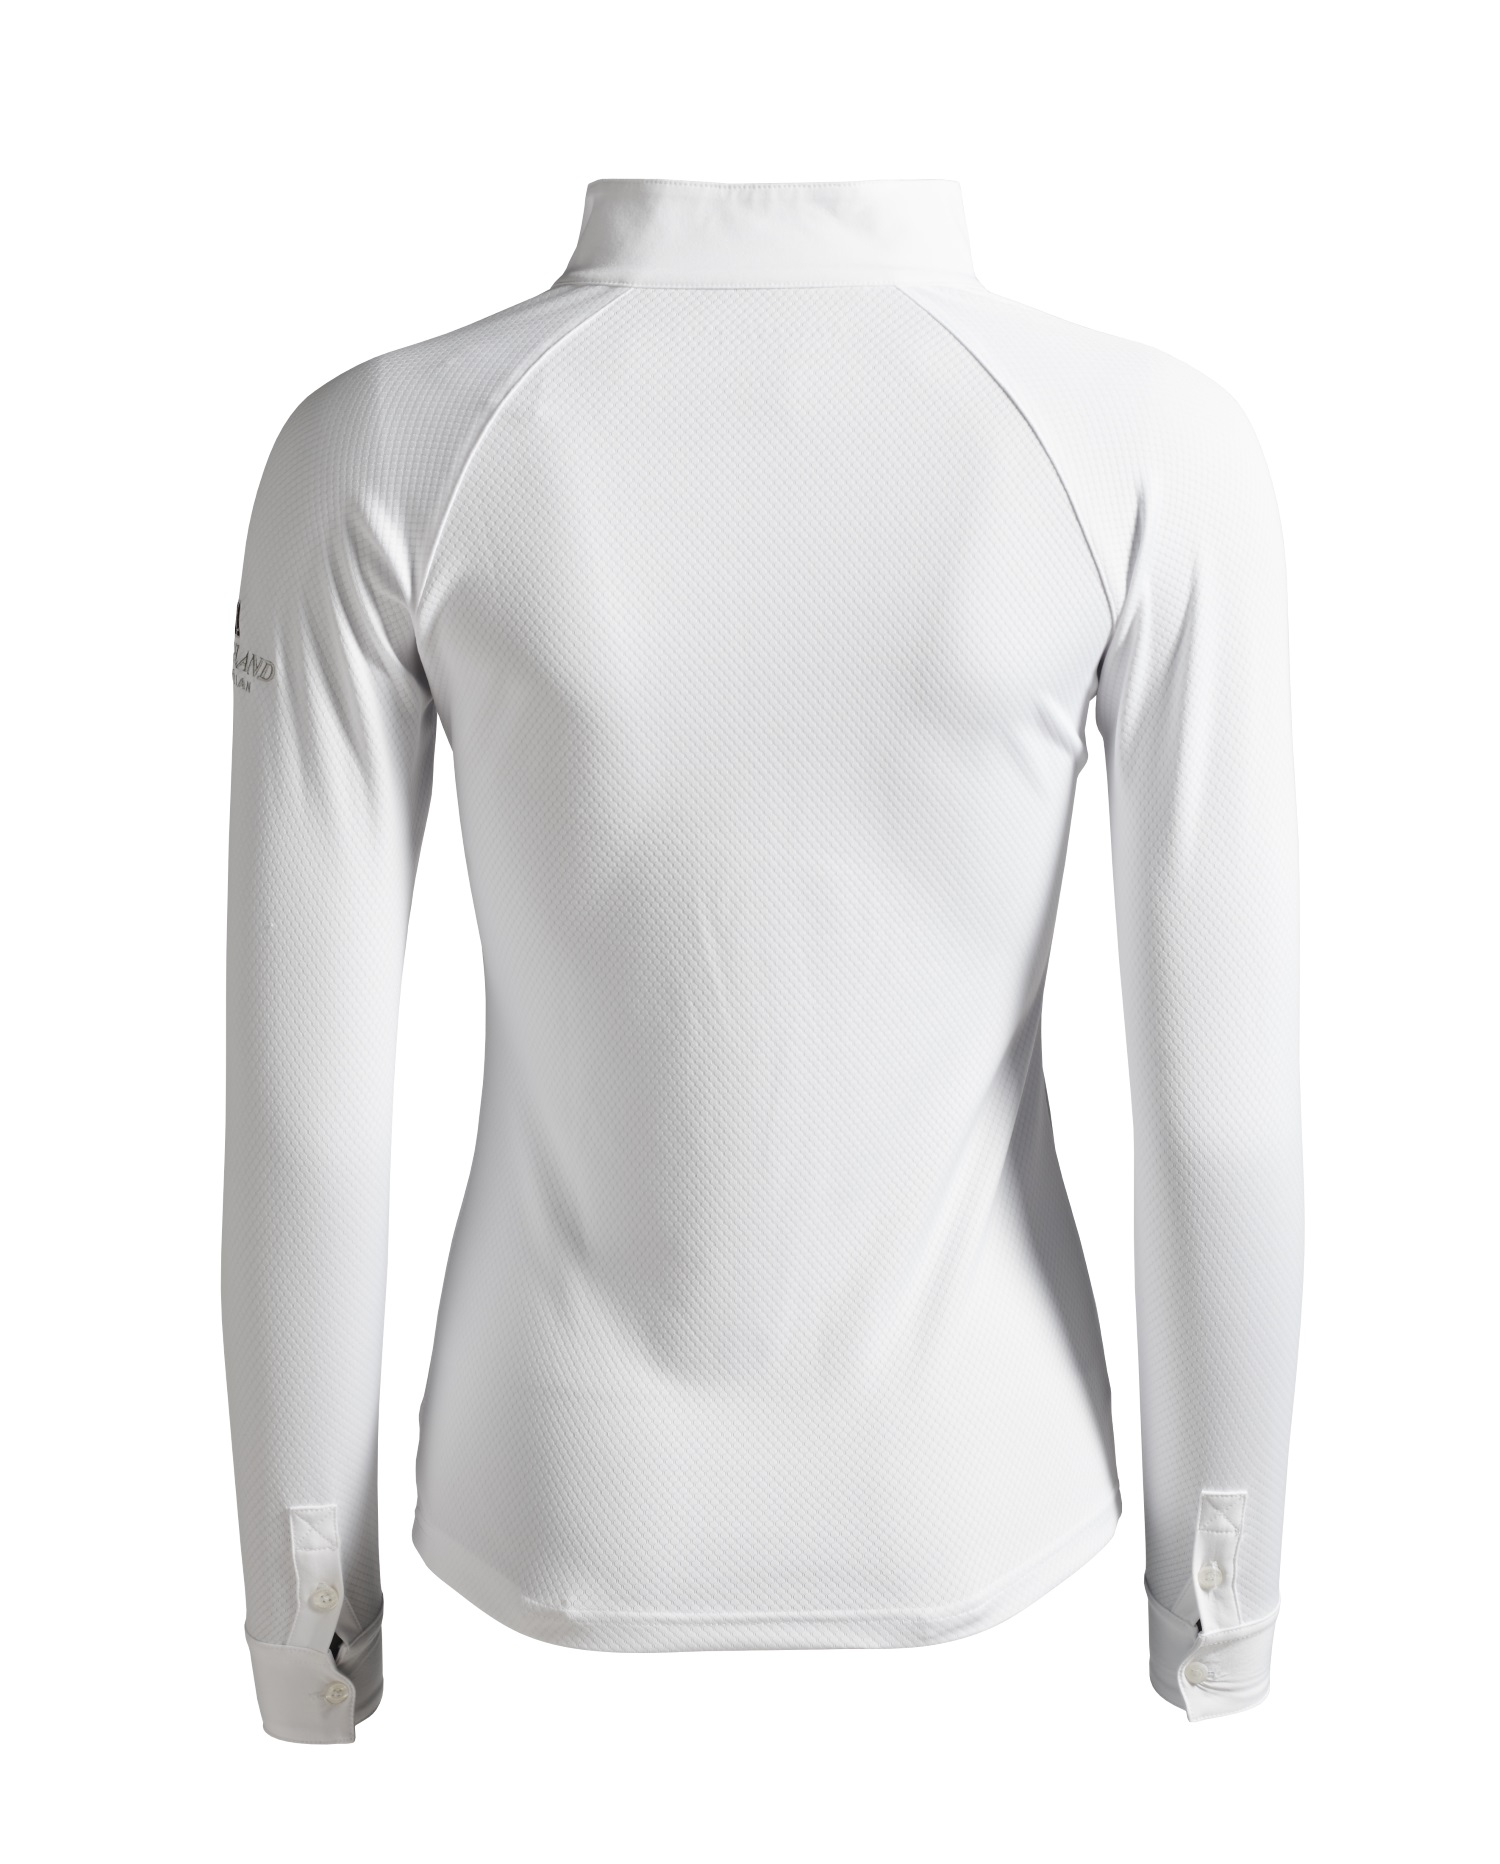 KINGSLAND Classic Damen Langarm Turniershirt - white - XS - 2